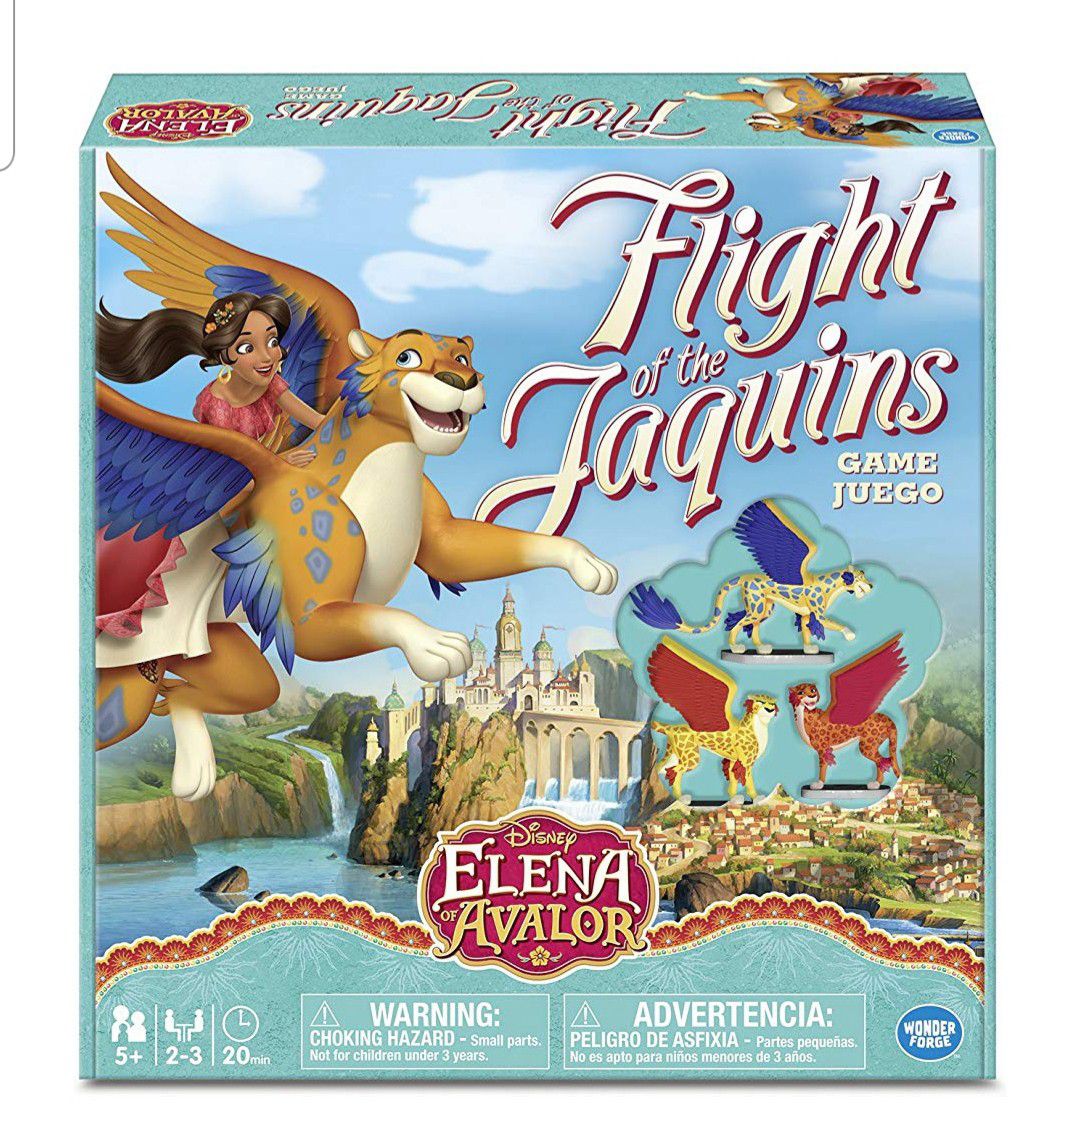 Disney Elena Avalor Flight of the Jaquins Game Juego